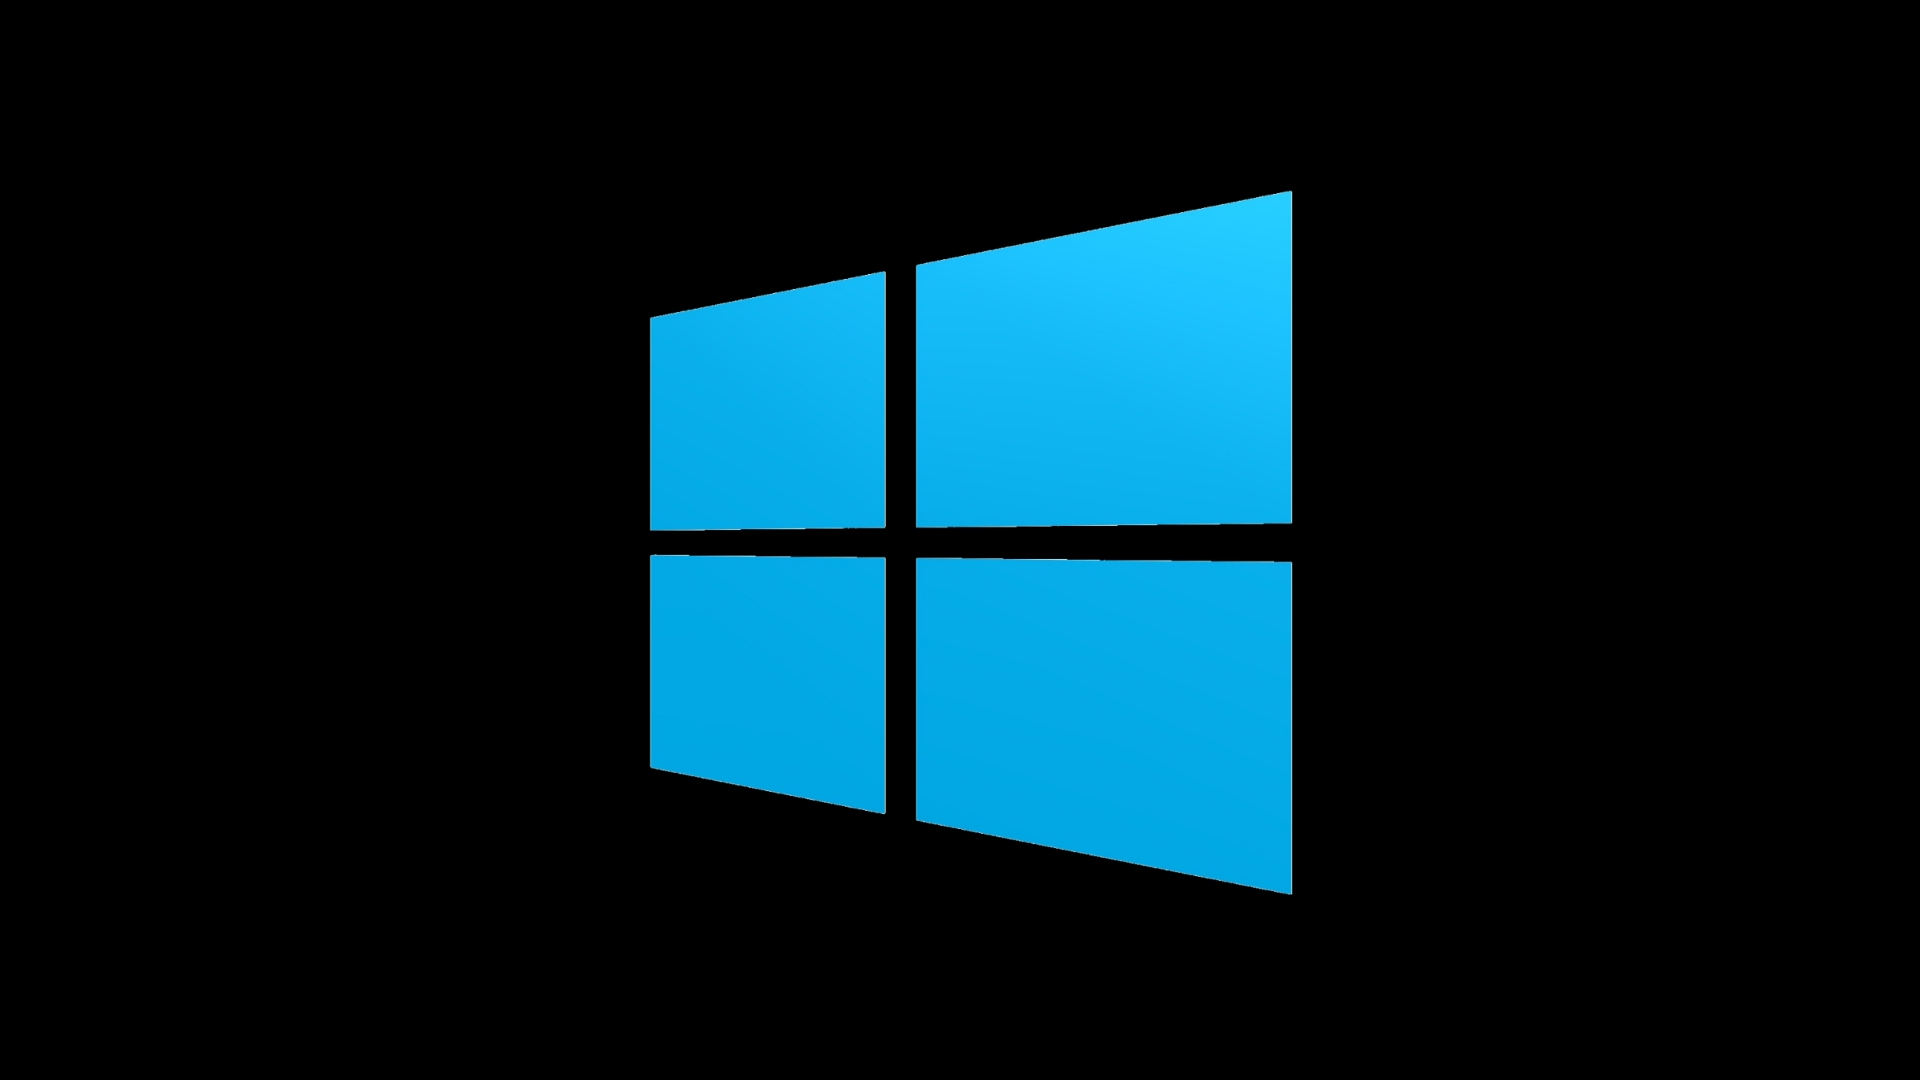 Windows 10 Logo Wallpaperjpg 1920x1080